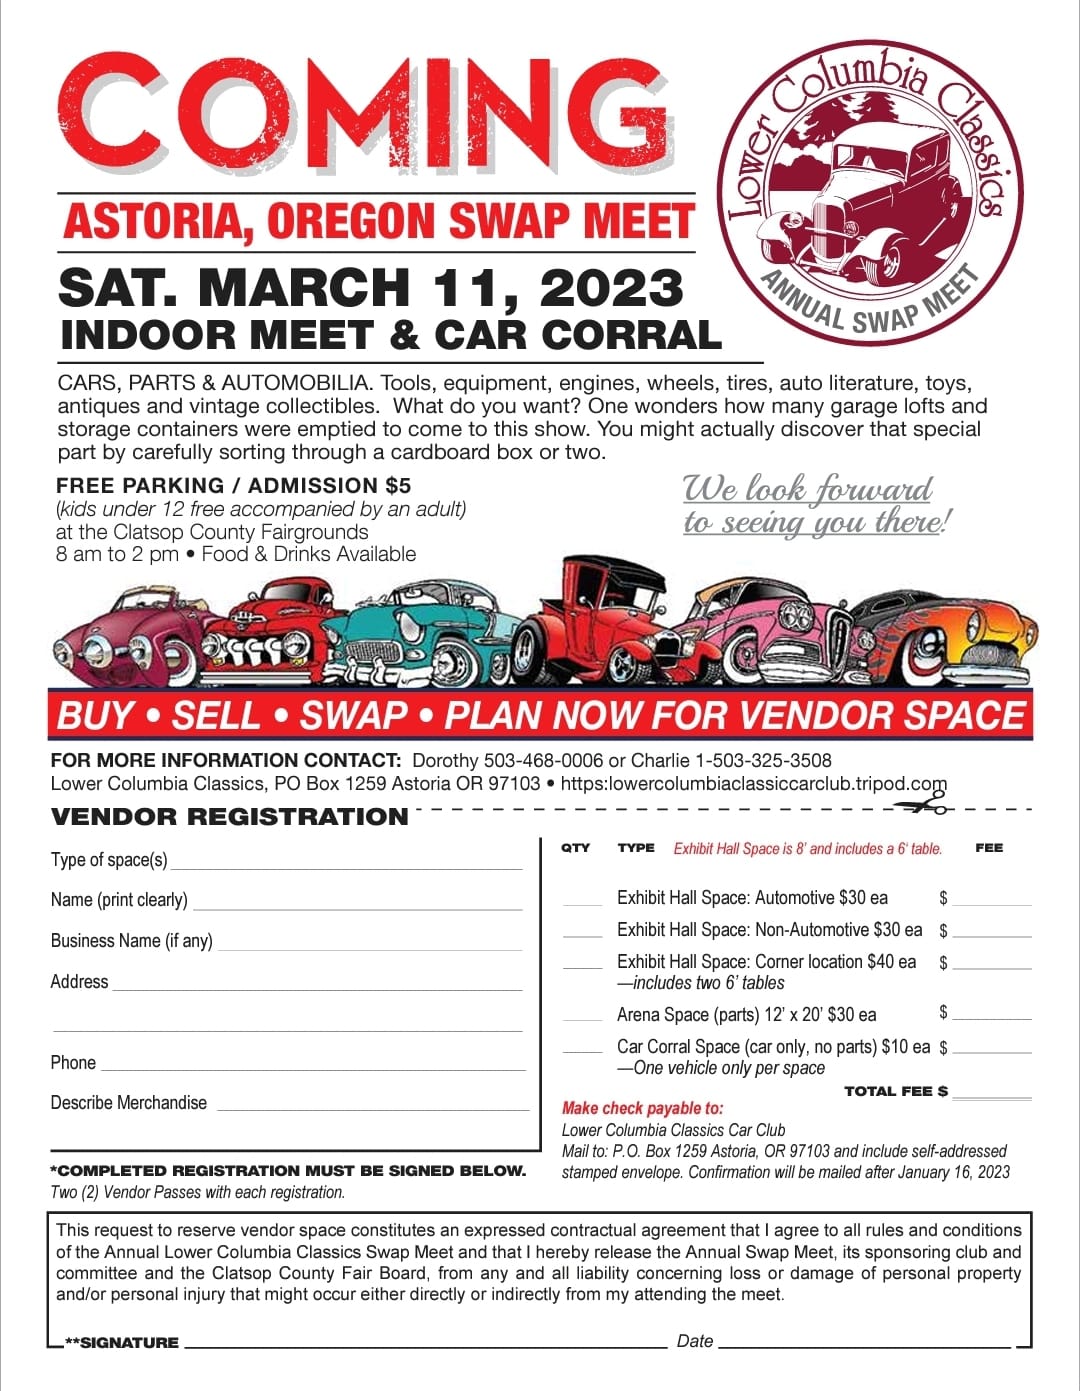 Astoria Swap Meet & Car Corral